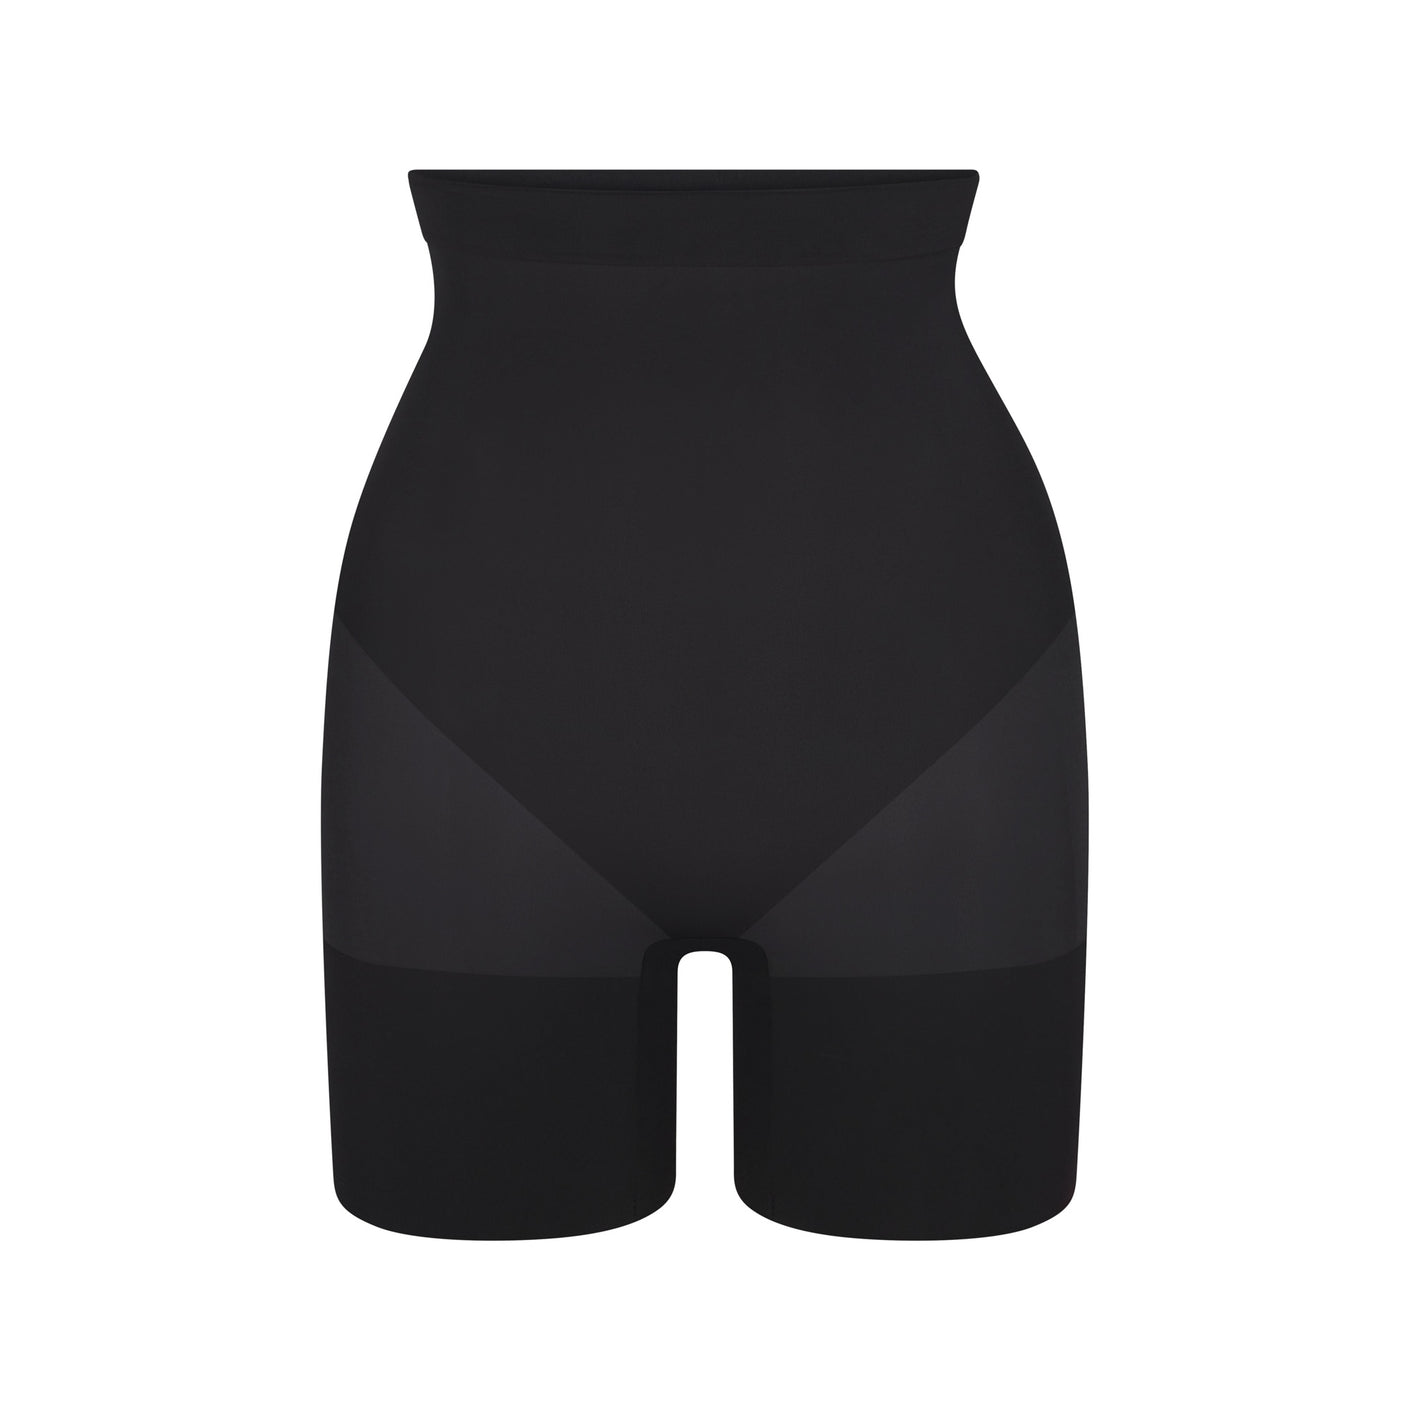 Buy SKIMS Black Soft Smoothing Shorts for Women in UAE